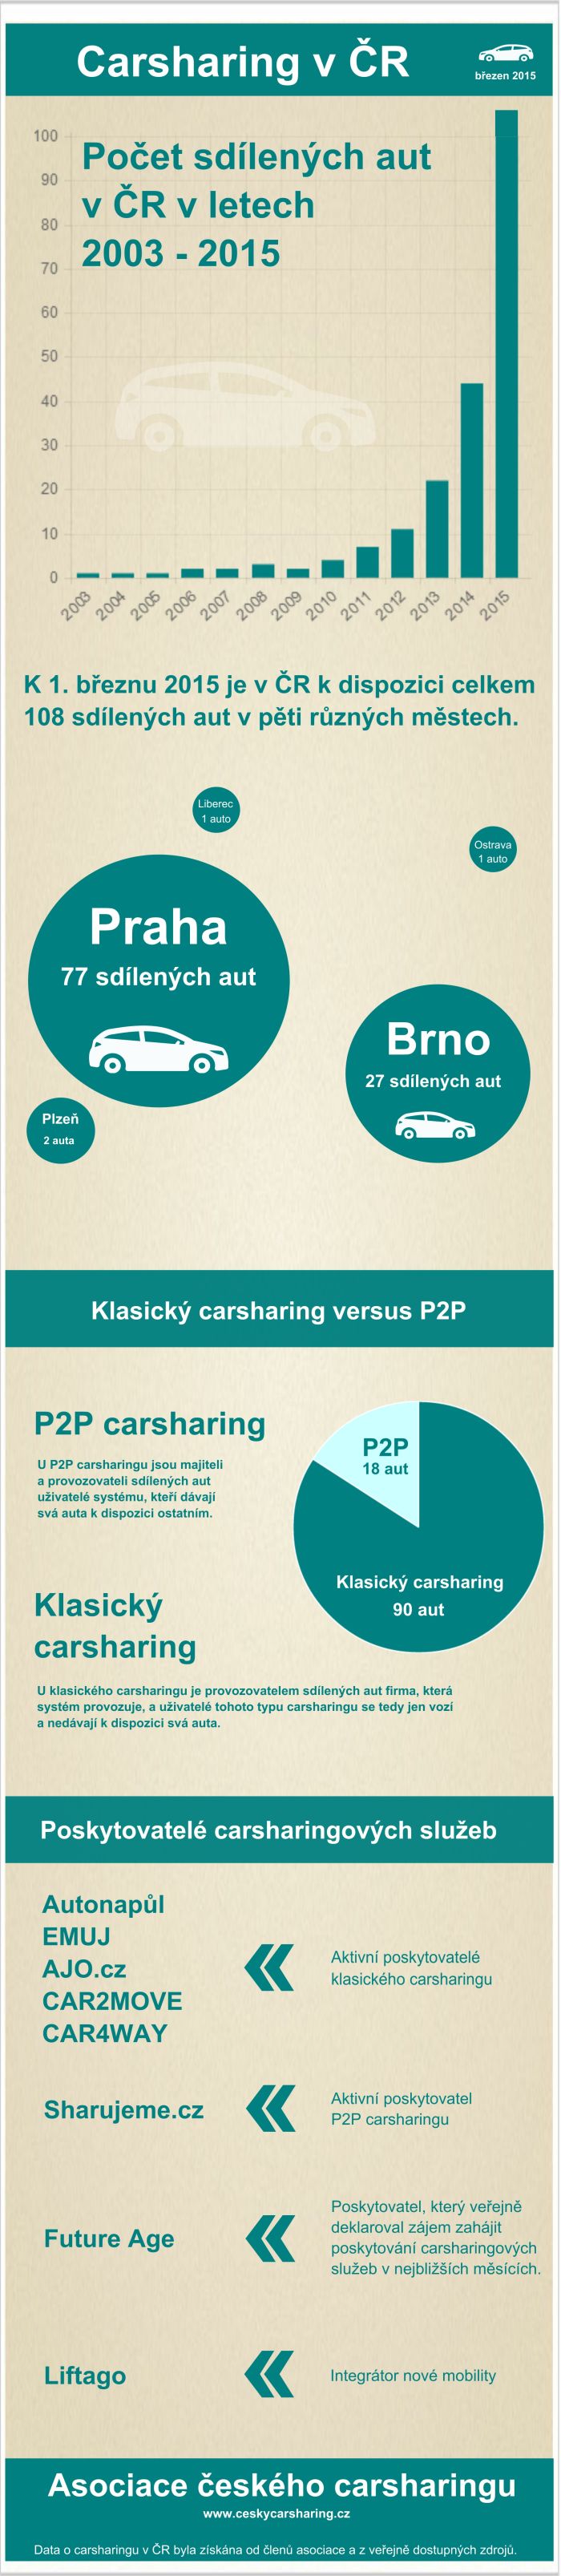 Carsharing v ČR infografika